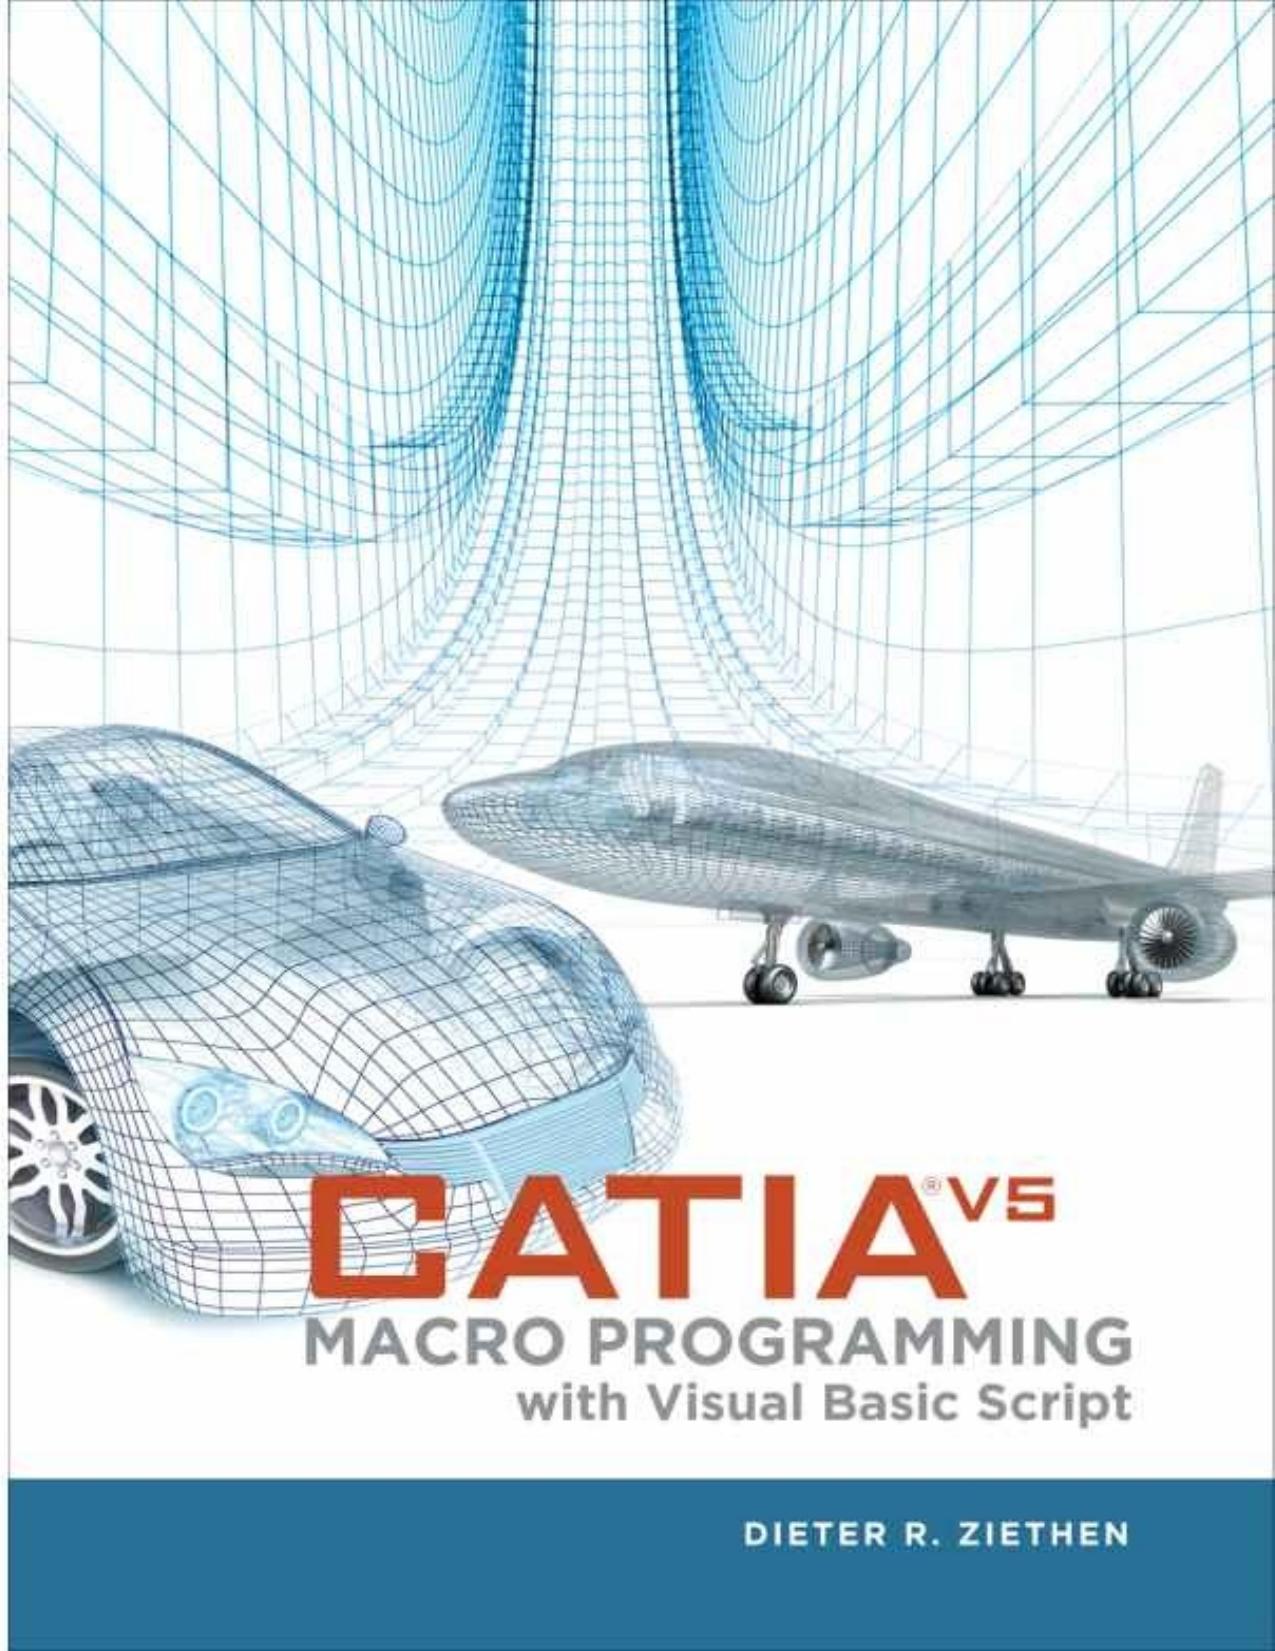 CATIA V5 Macro Programming with Visual Basic Script.jpg